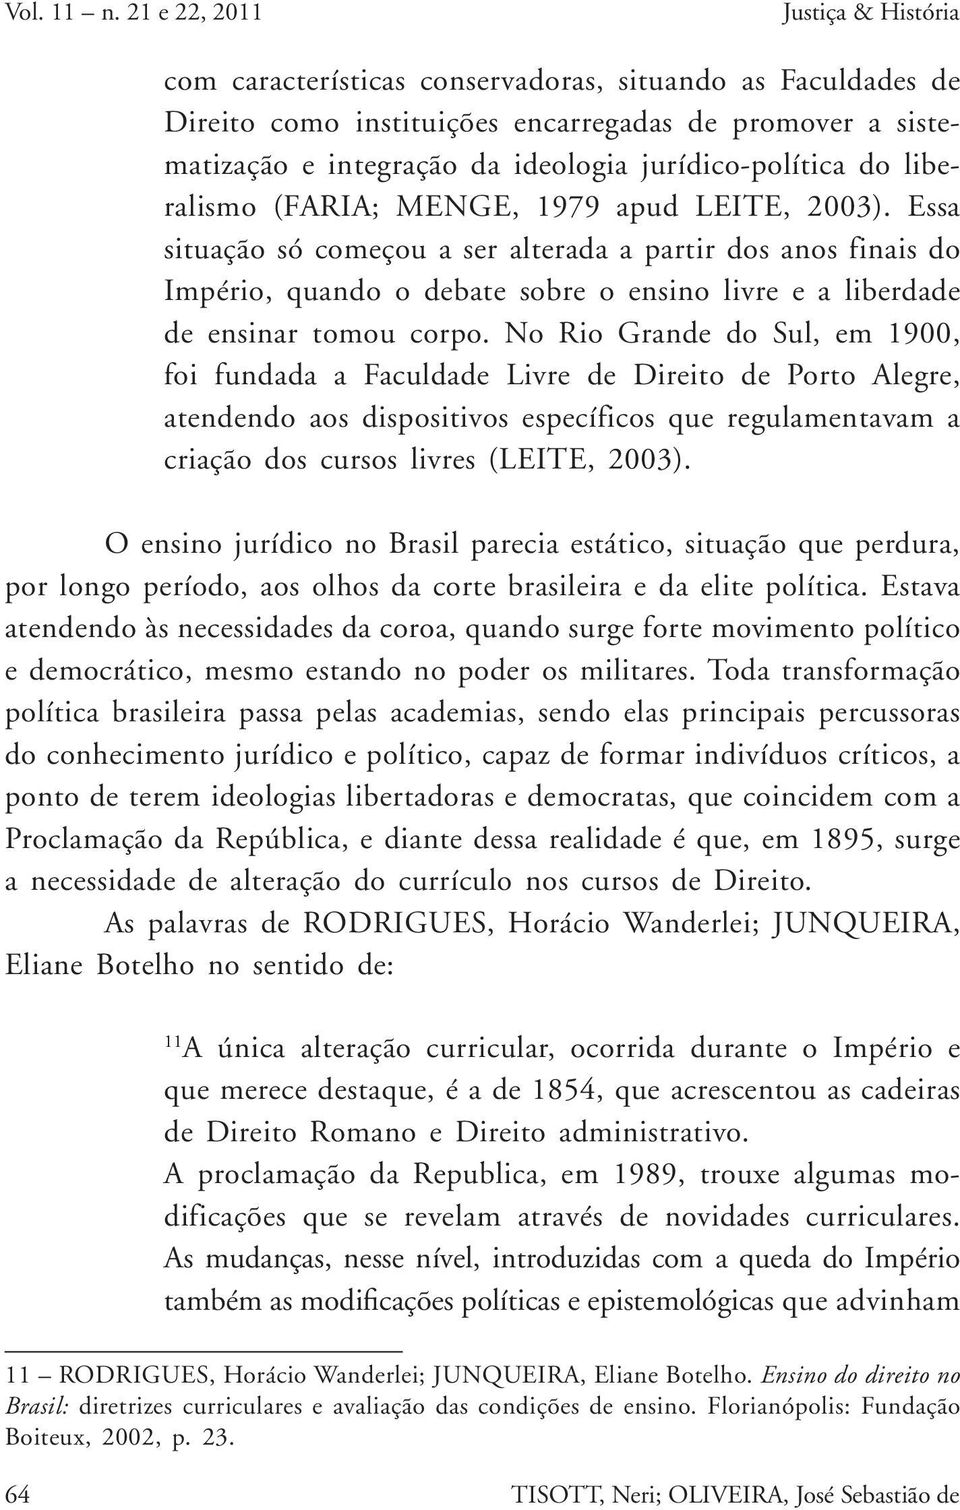 jurídico-política do liberalismo (FARIA; MENGE, 1979 apud LEITE, 2003).